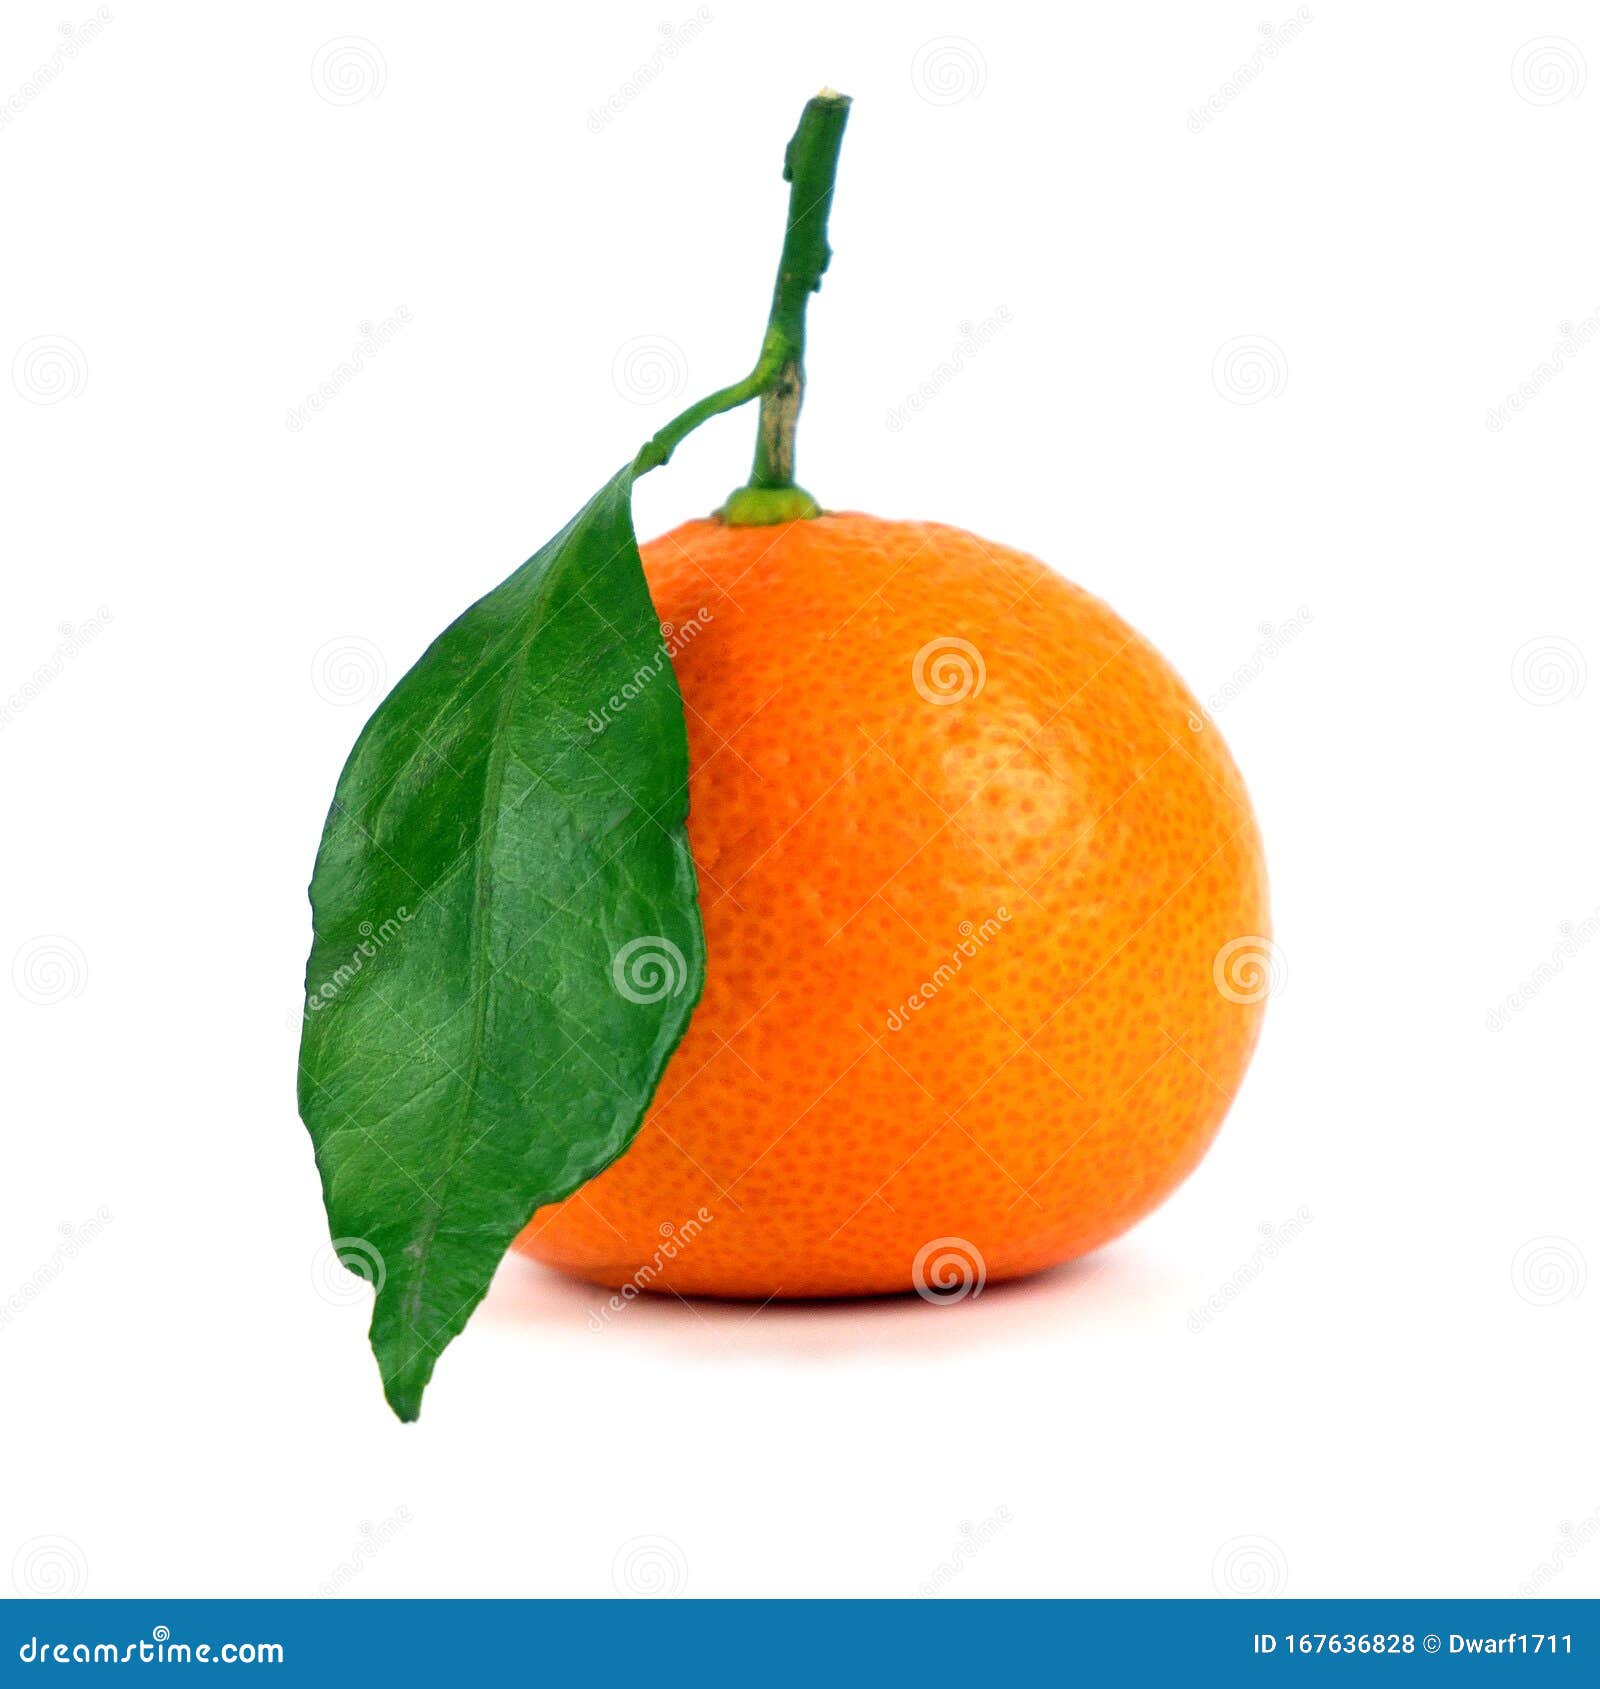 Ripe juicy mandarin with leaf isolated on white background